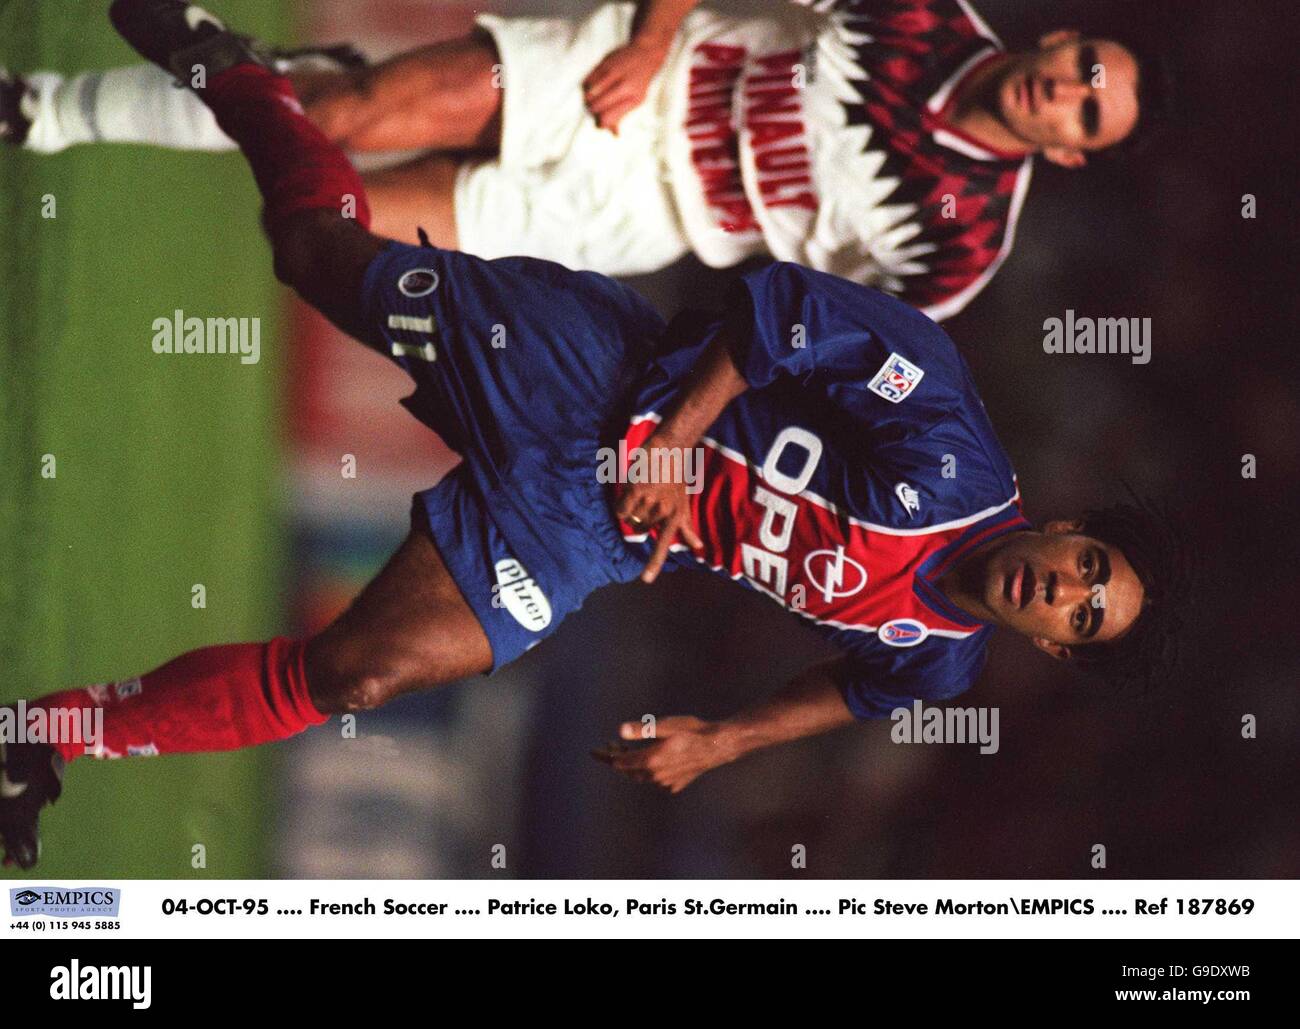 04-OCT-95, French Soccer, Patrice Loko, Paris St.Germain Stock Photo